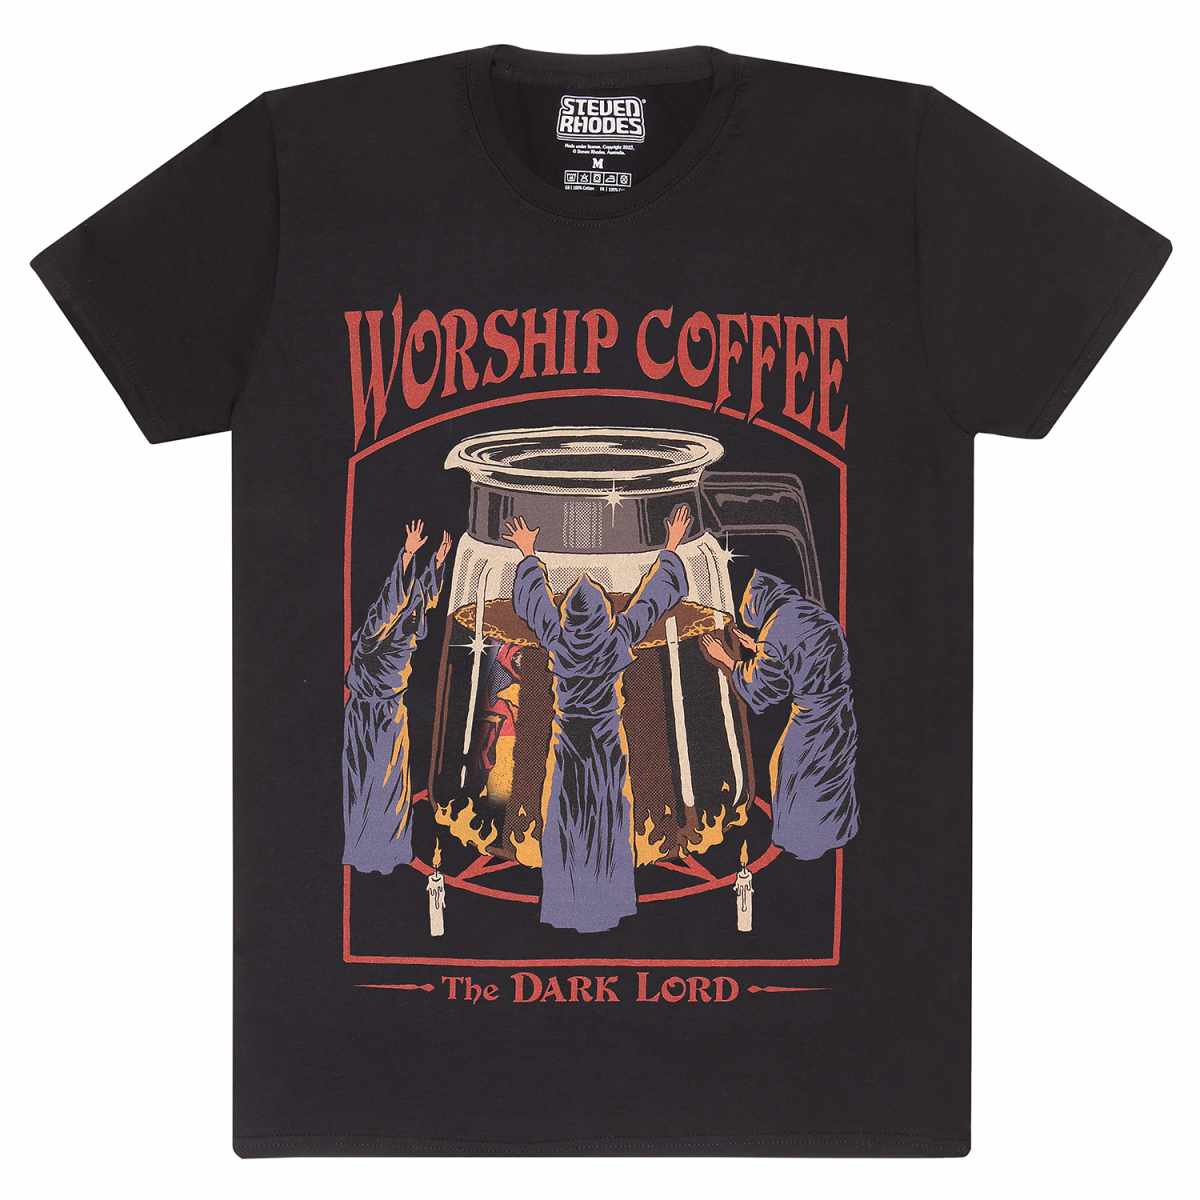 Steven Rhodes T-Shirt | Worship Coffee